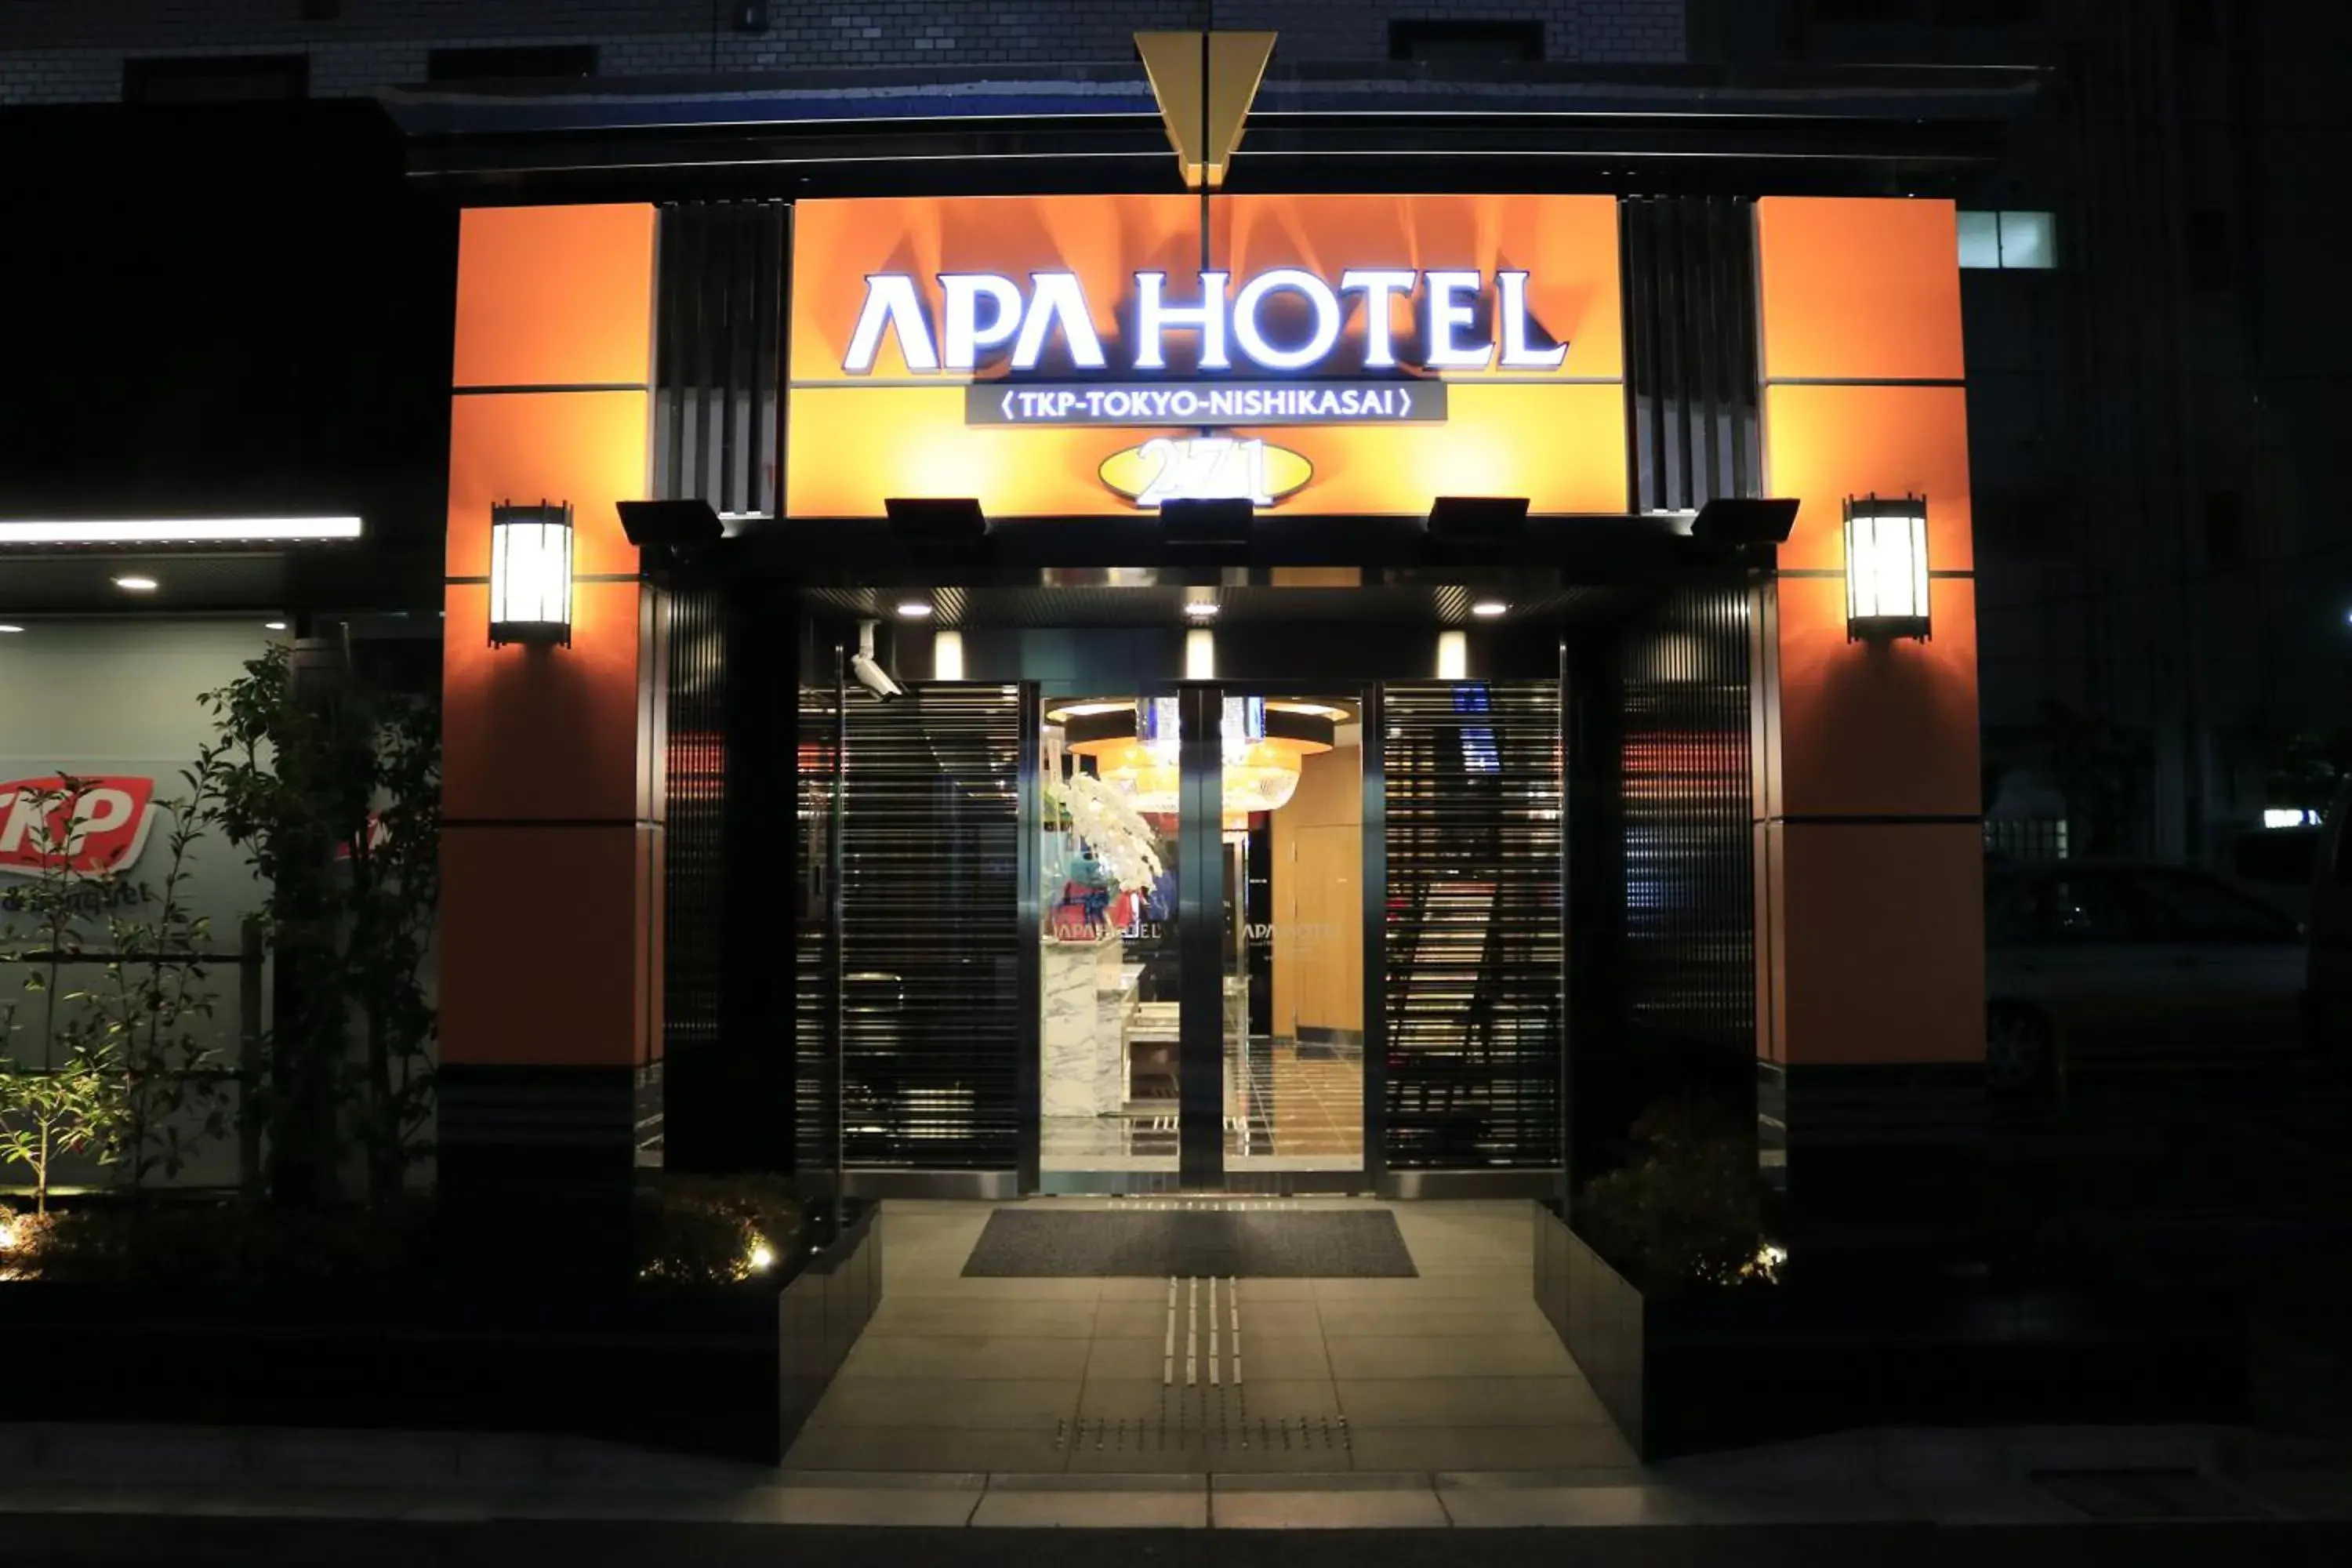 Facade/entrance in APA Hotel TKP Tokyo Nishikasai